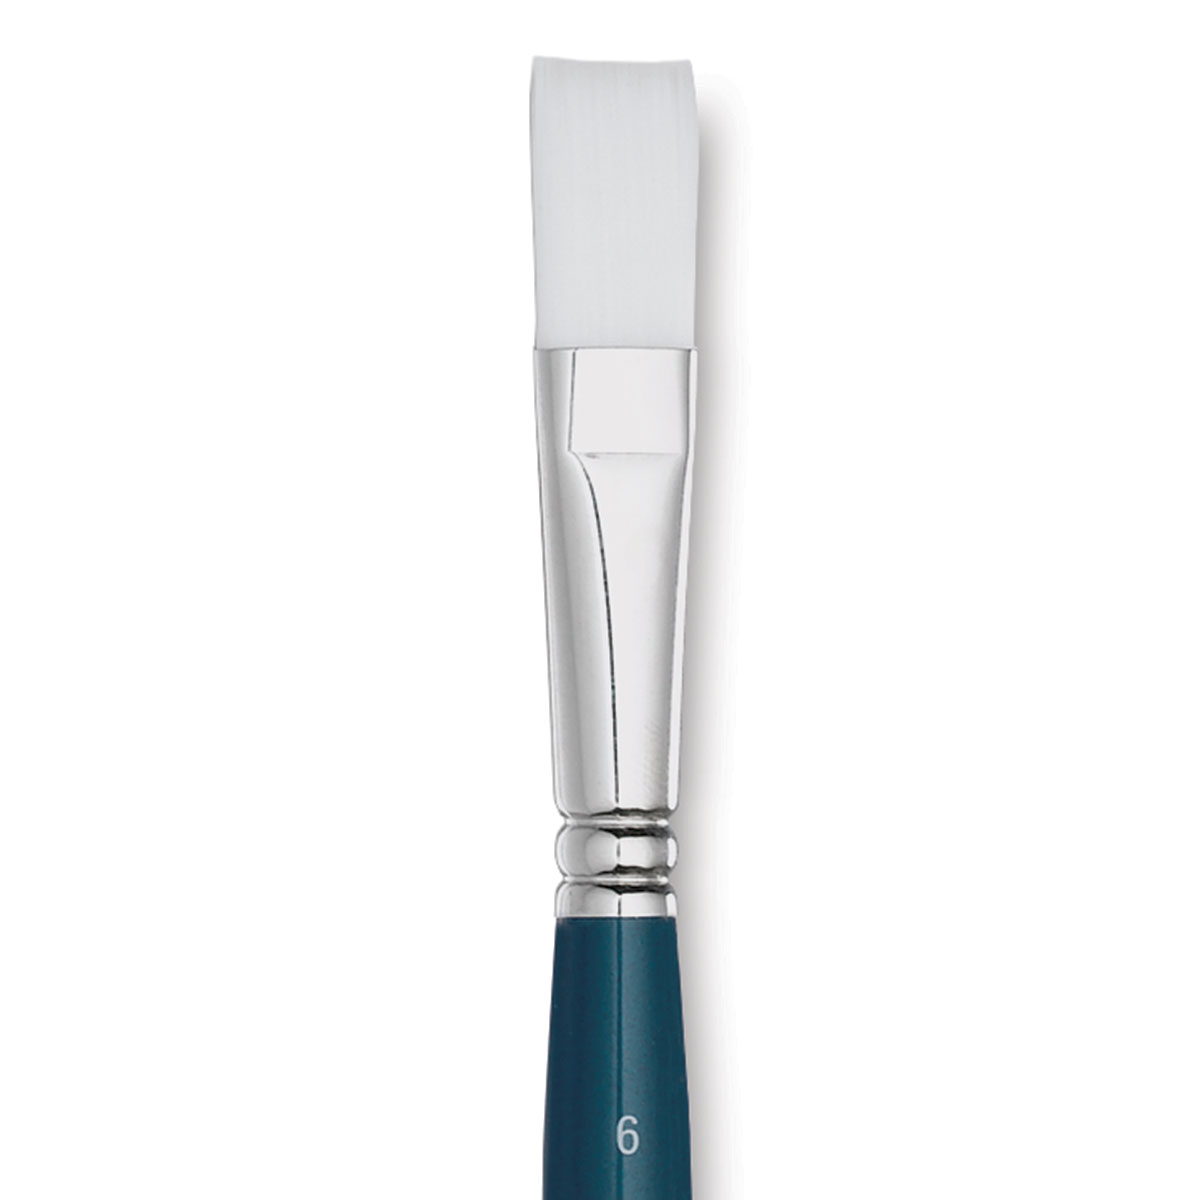 Grumbacher® Academy® Synthetic Watercolor Short Handle Mop Brush